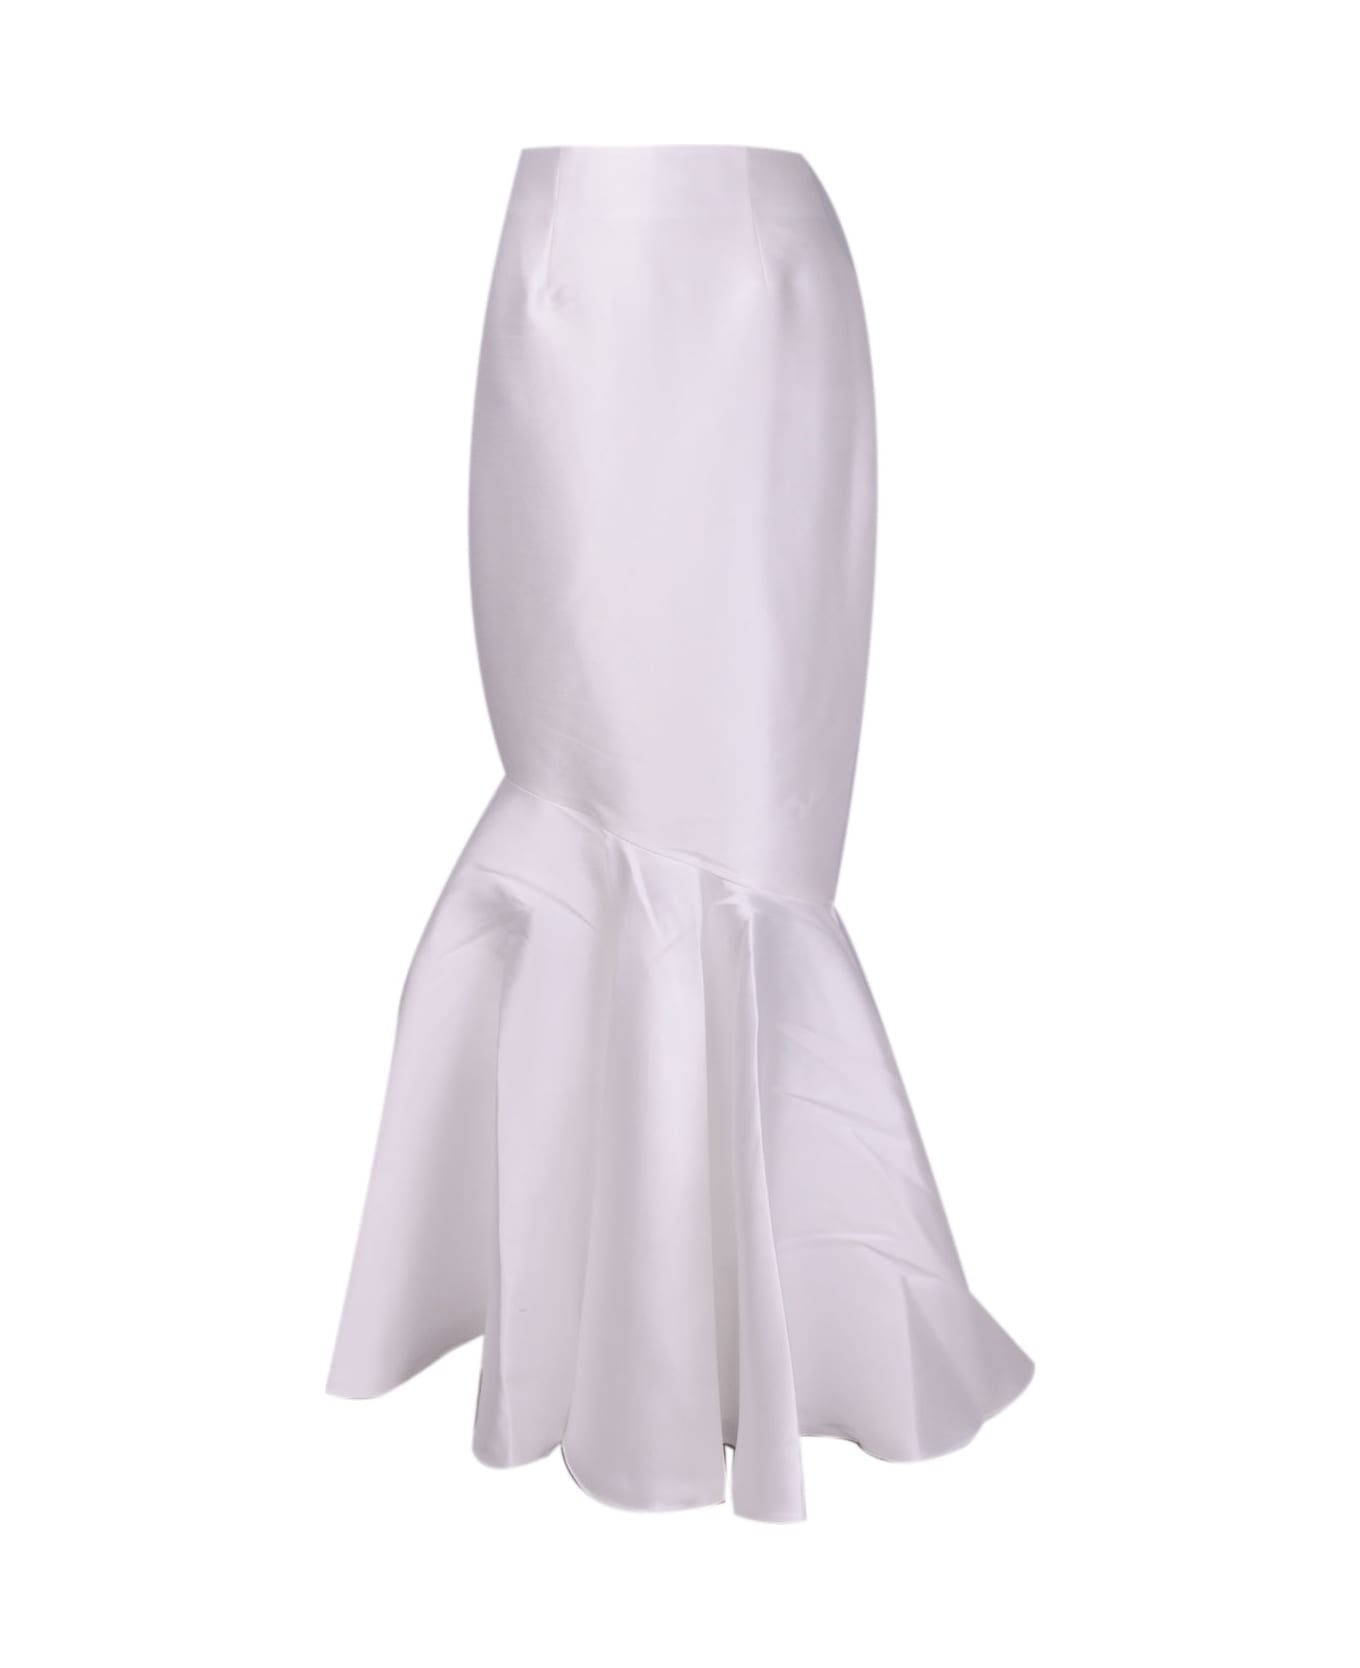 Solace London Skirt - White